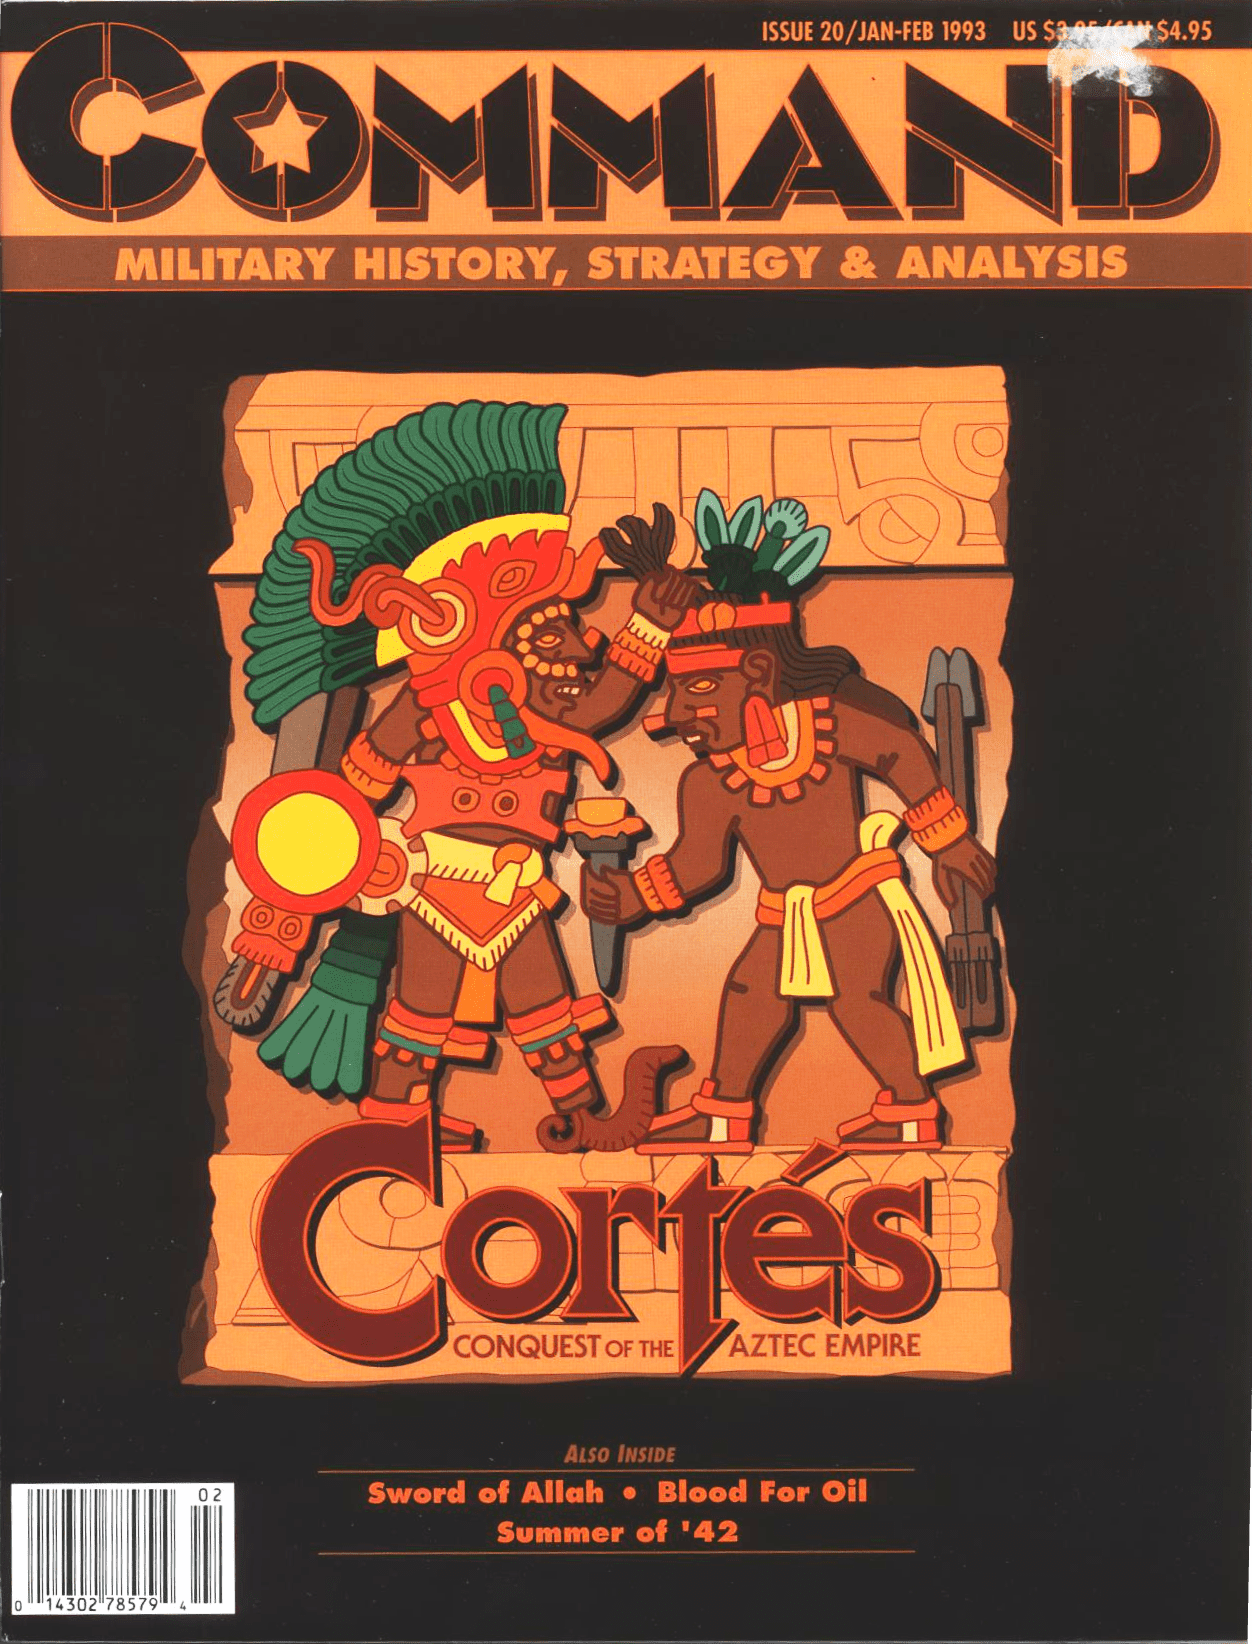 Cortes: Conquest of the Aztec Empire